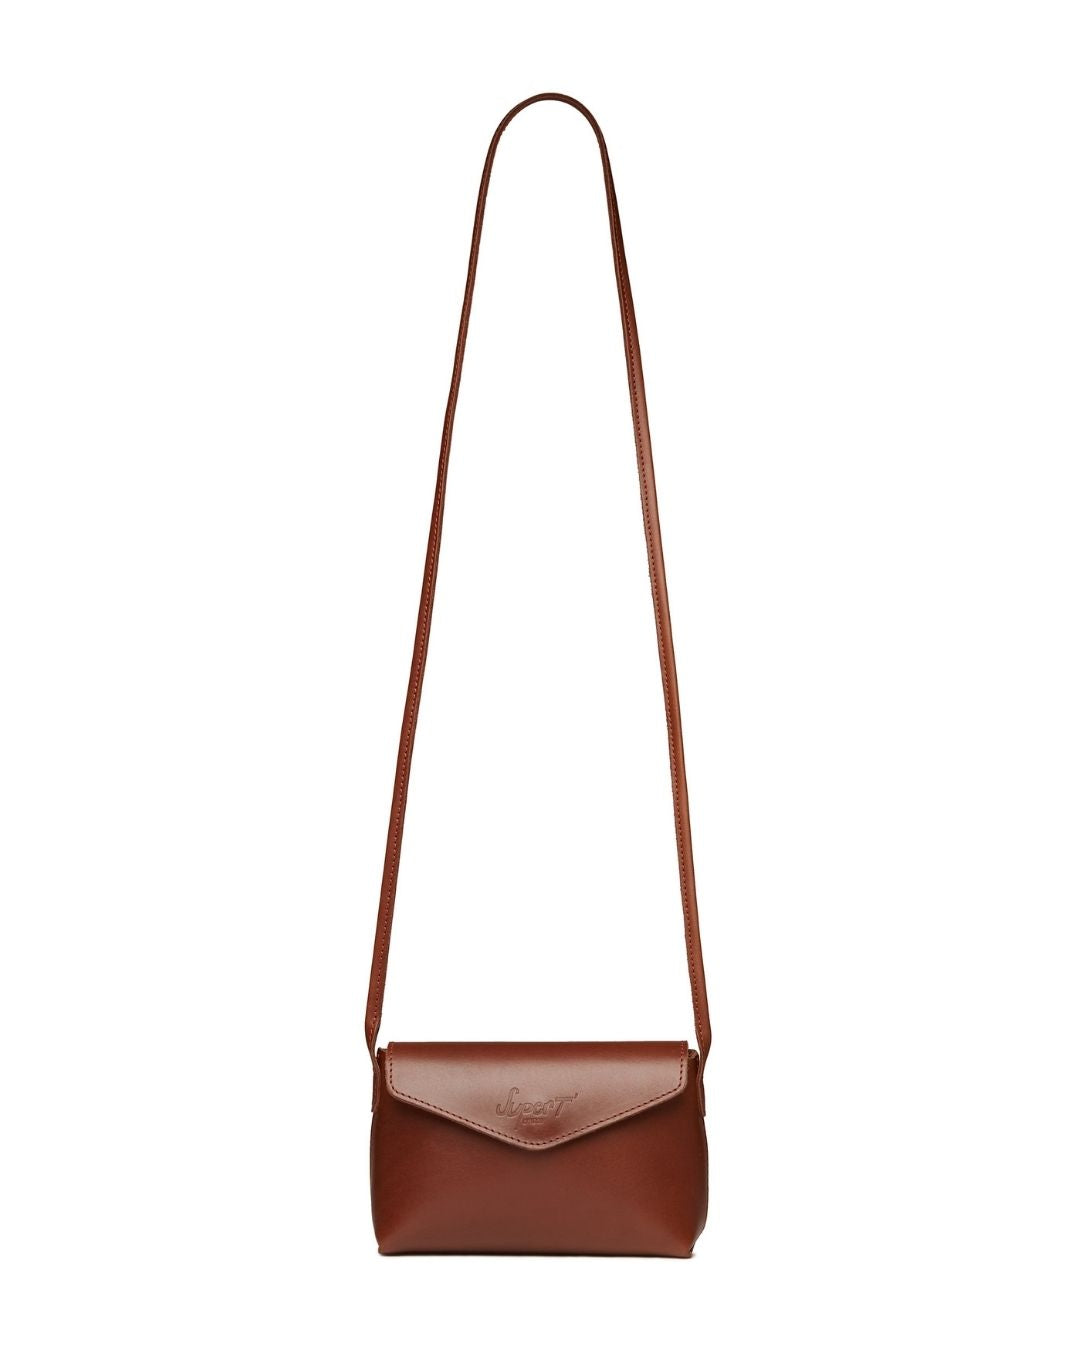 Mini Leather Envelope Clutch Bag